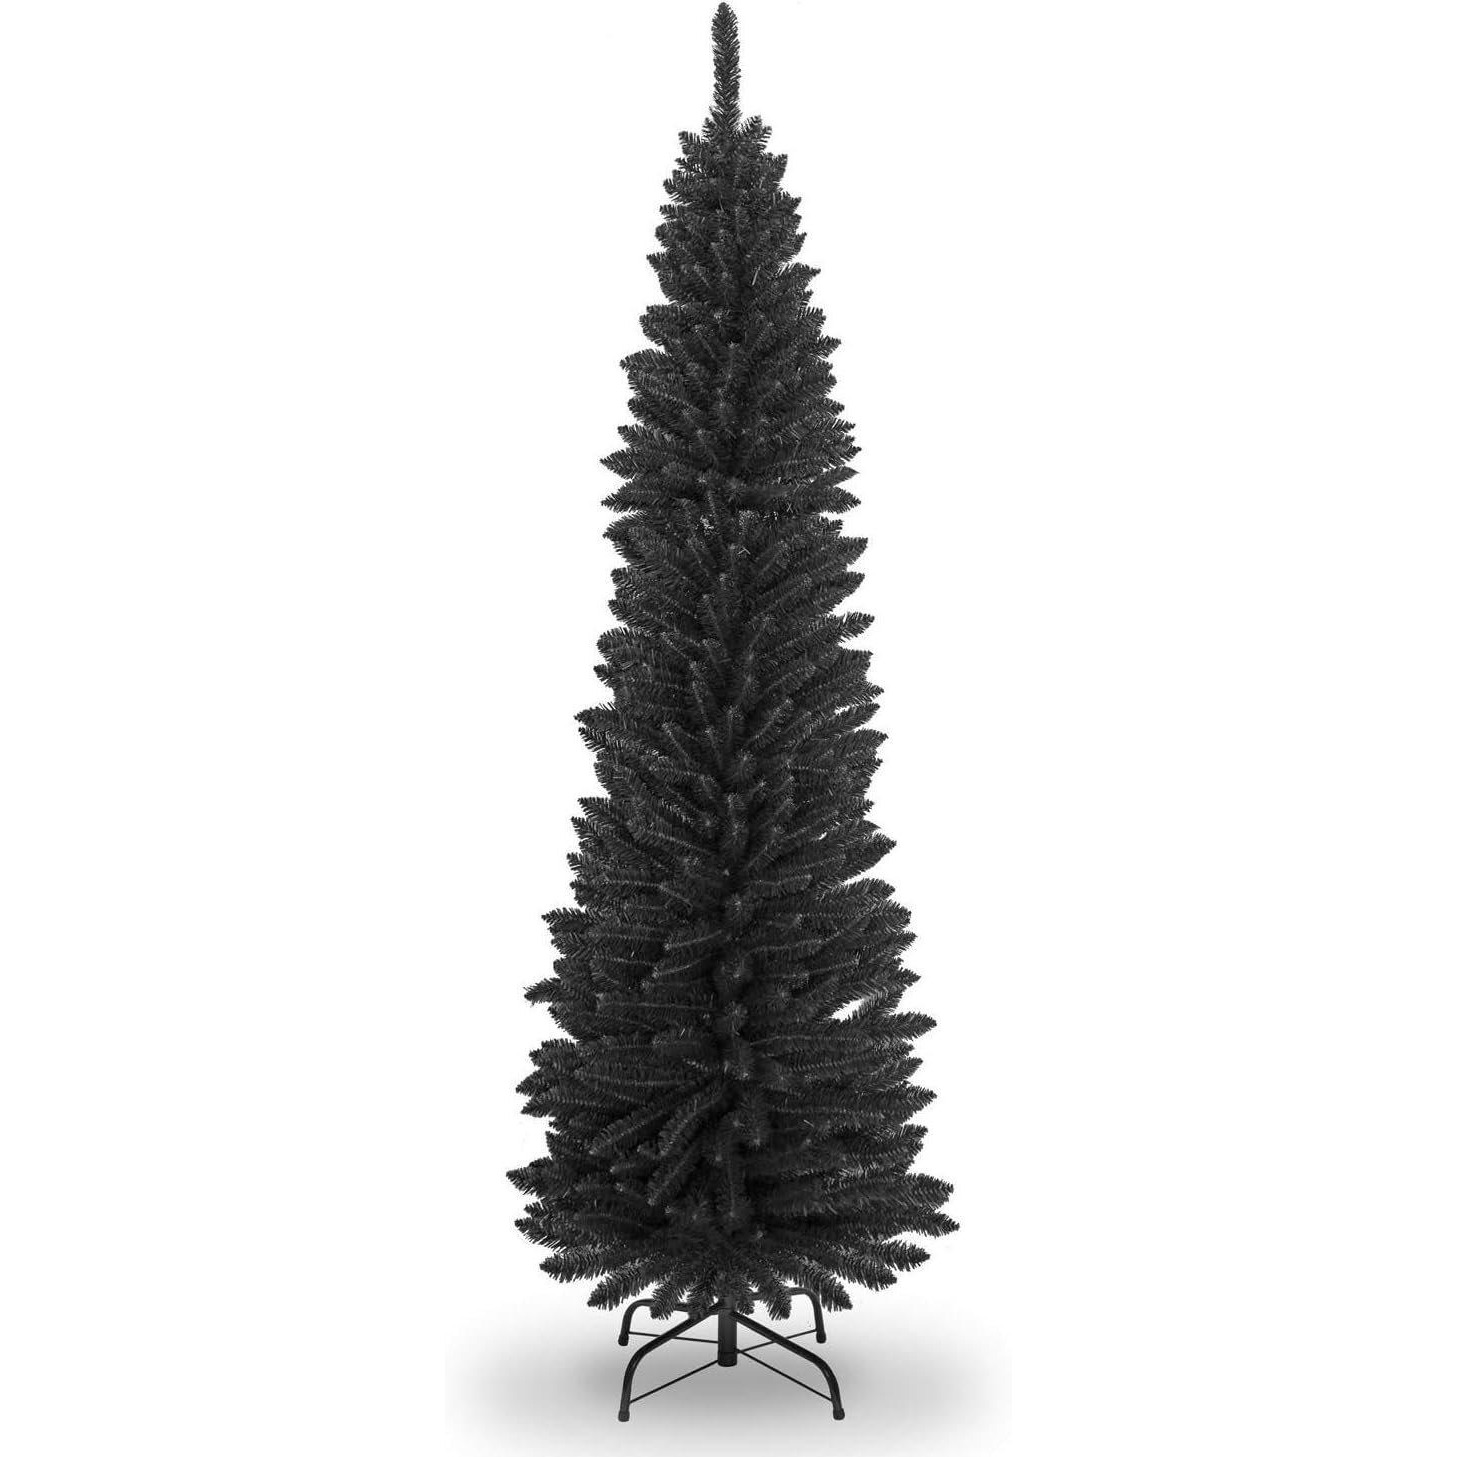 4FT Black Pencil Cristmas Tree - image 1